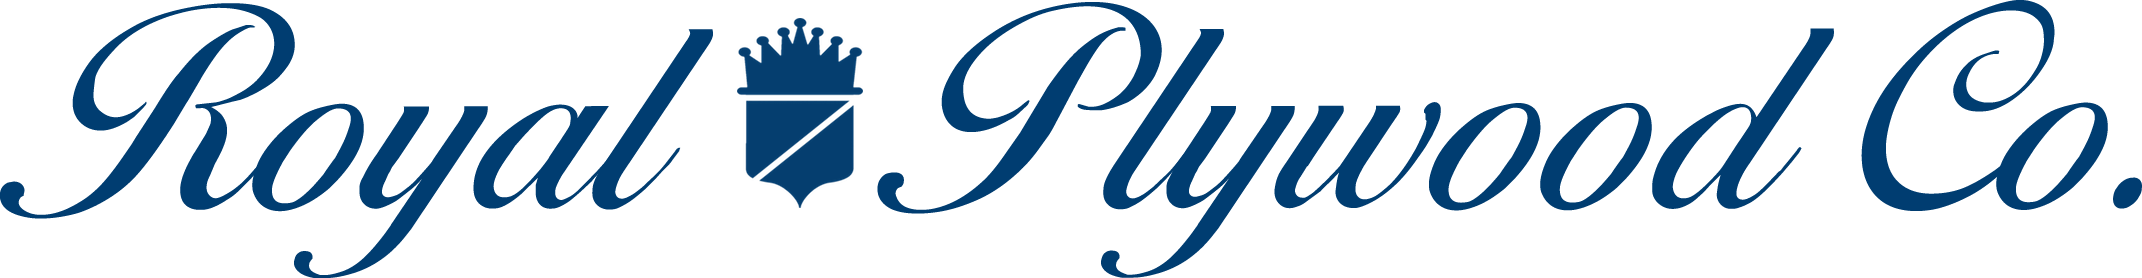 royal plywood logo